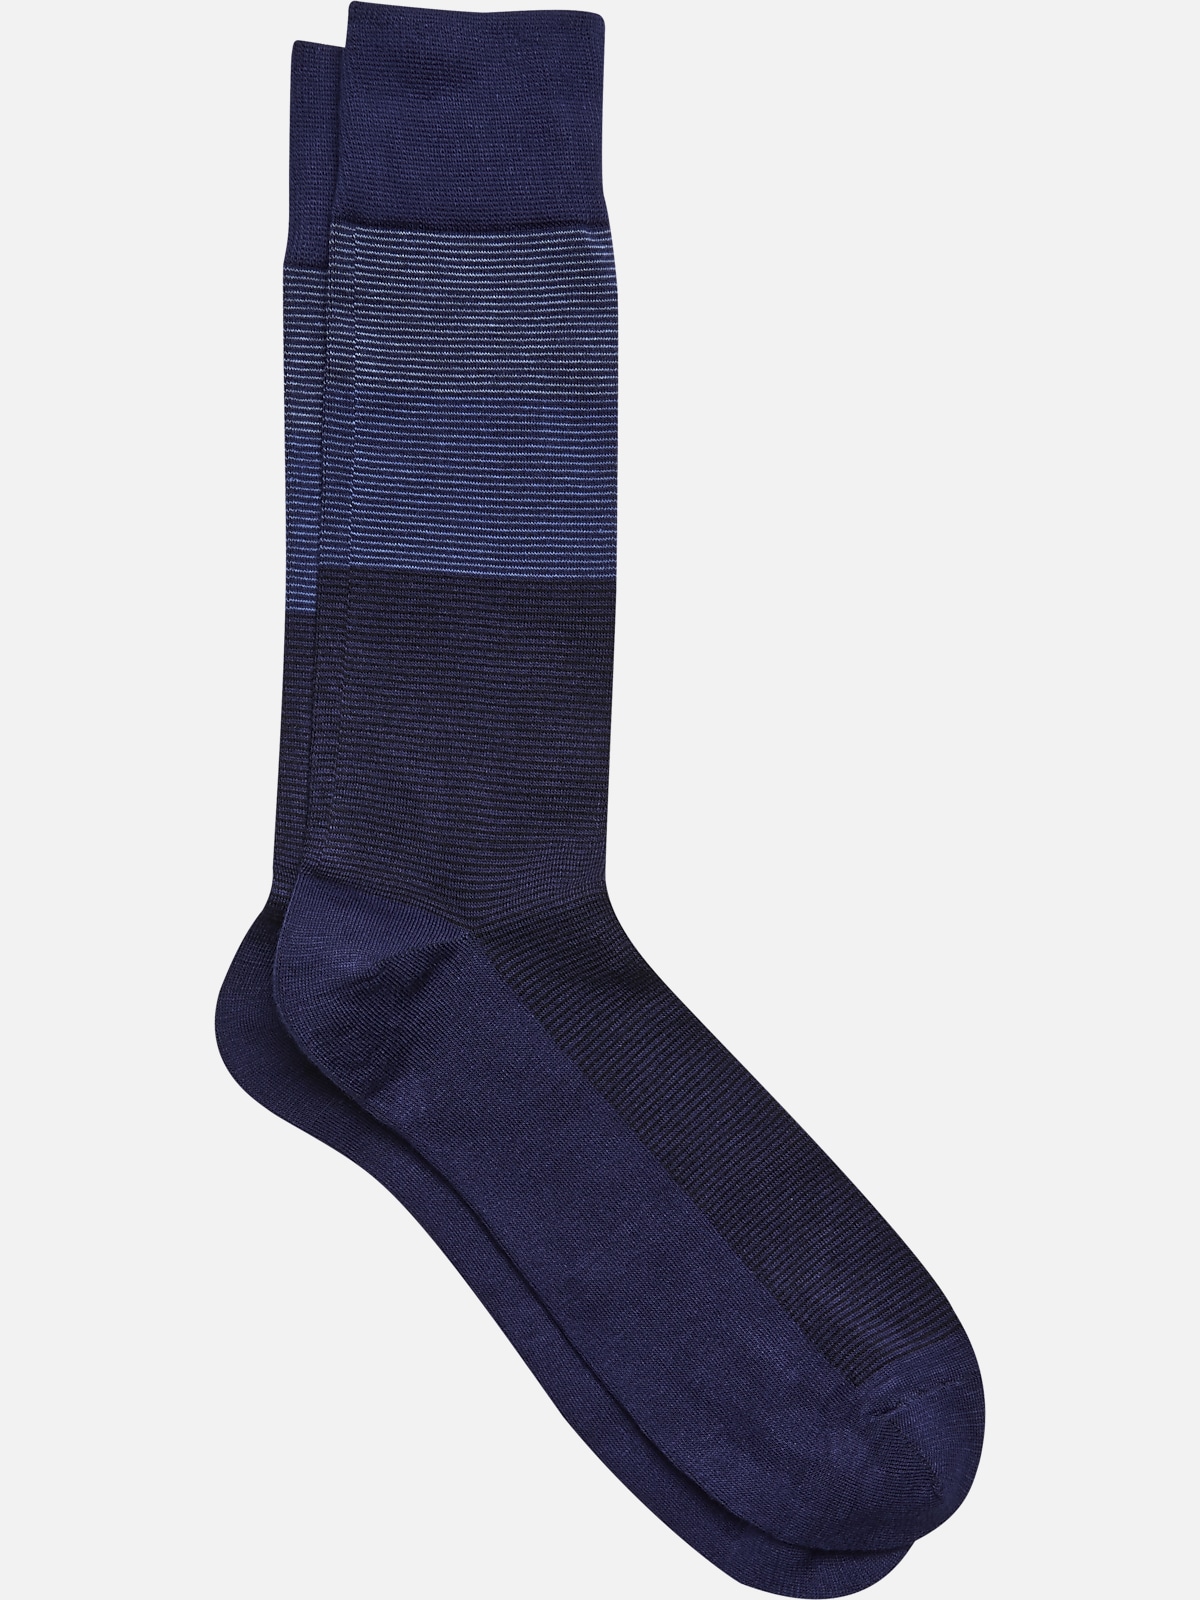 Pronto Uomo Stripe Socks, 1-Pair | All Clearance $39.99| Men's Wearhouse